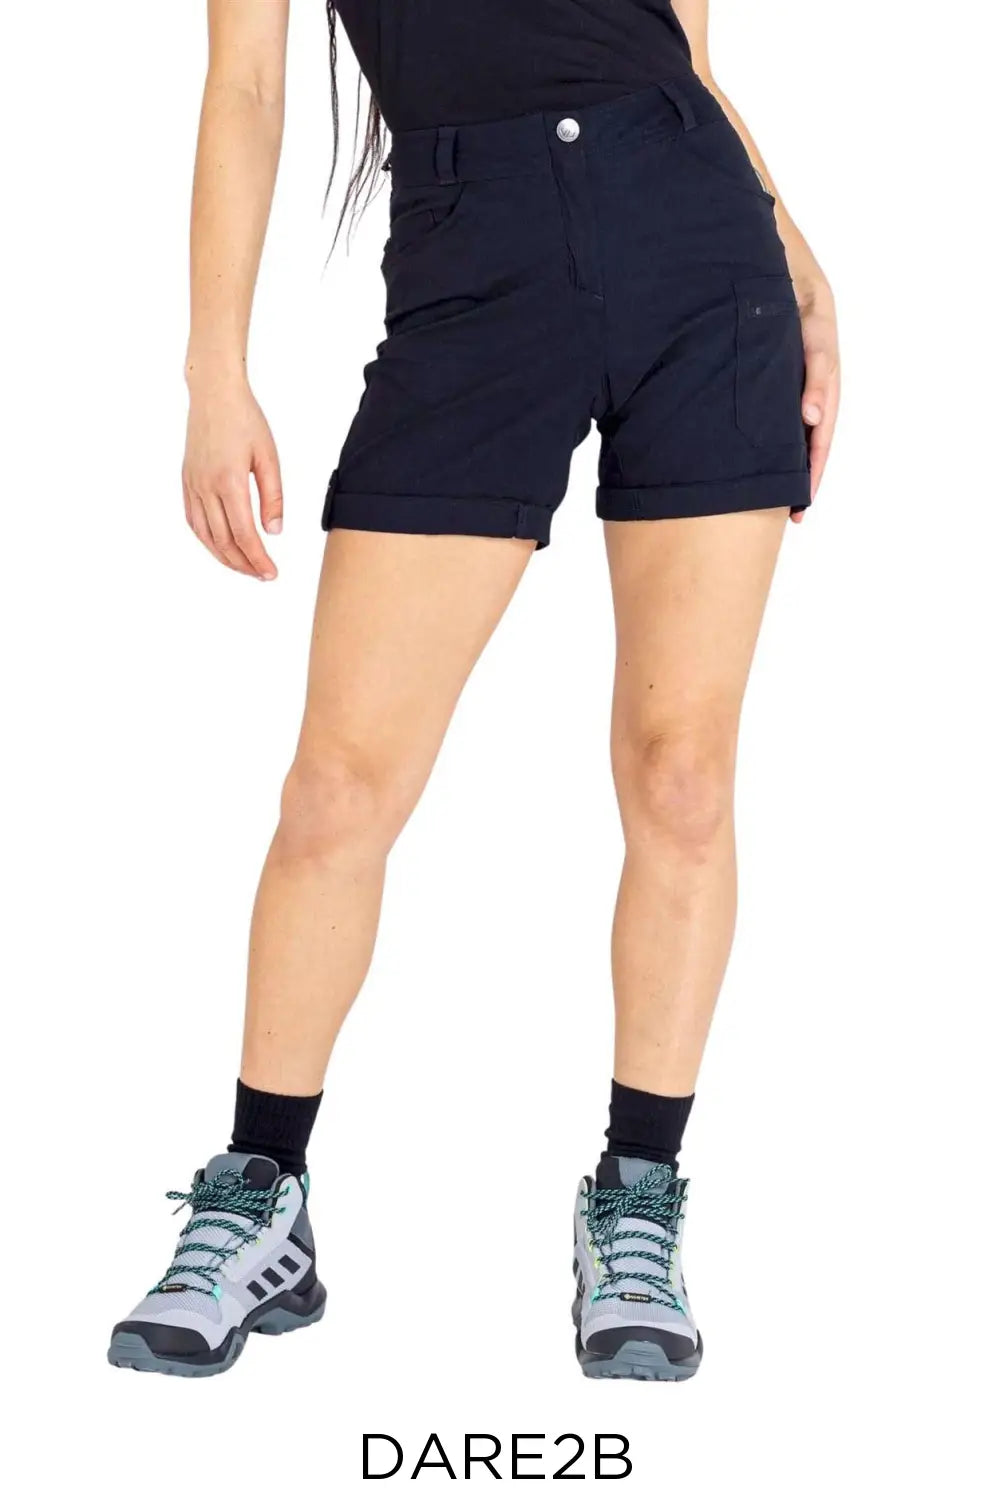 Dare2B Womens Sports Shorts Navy / 10